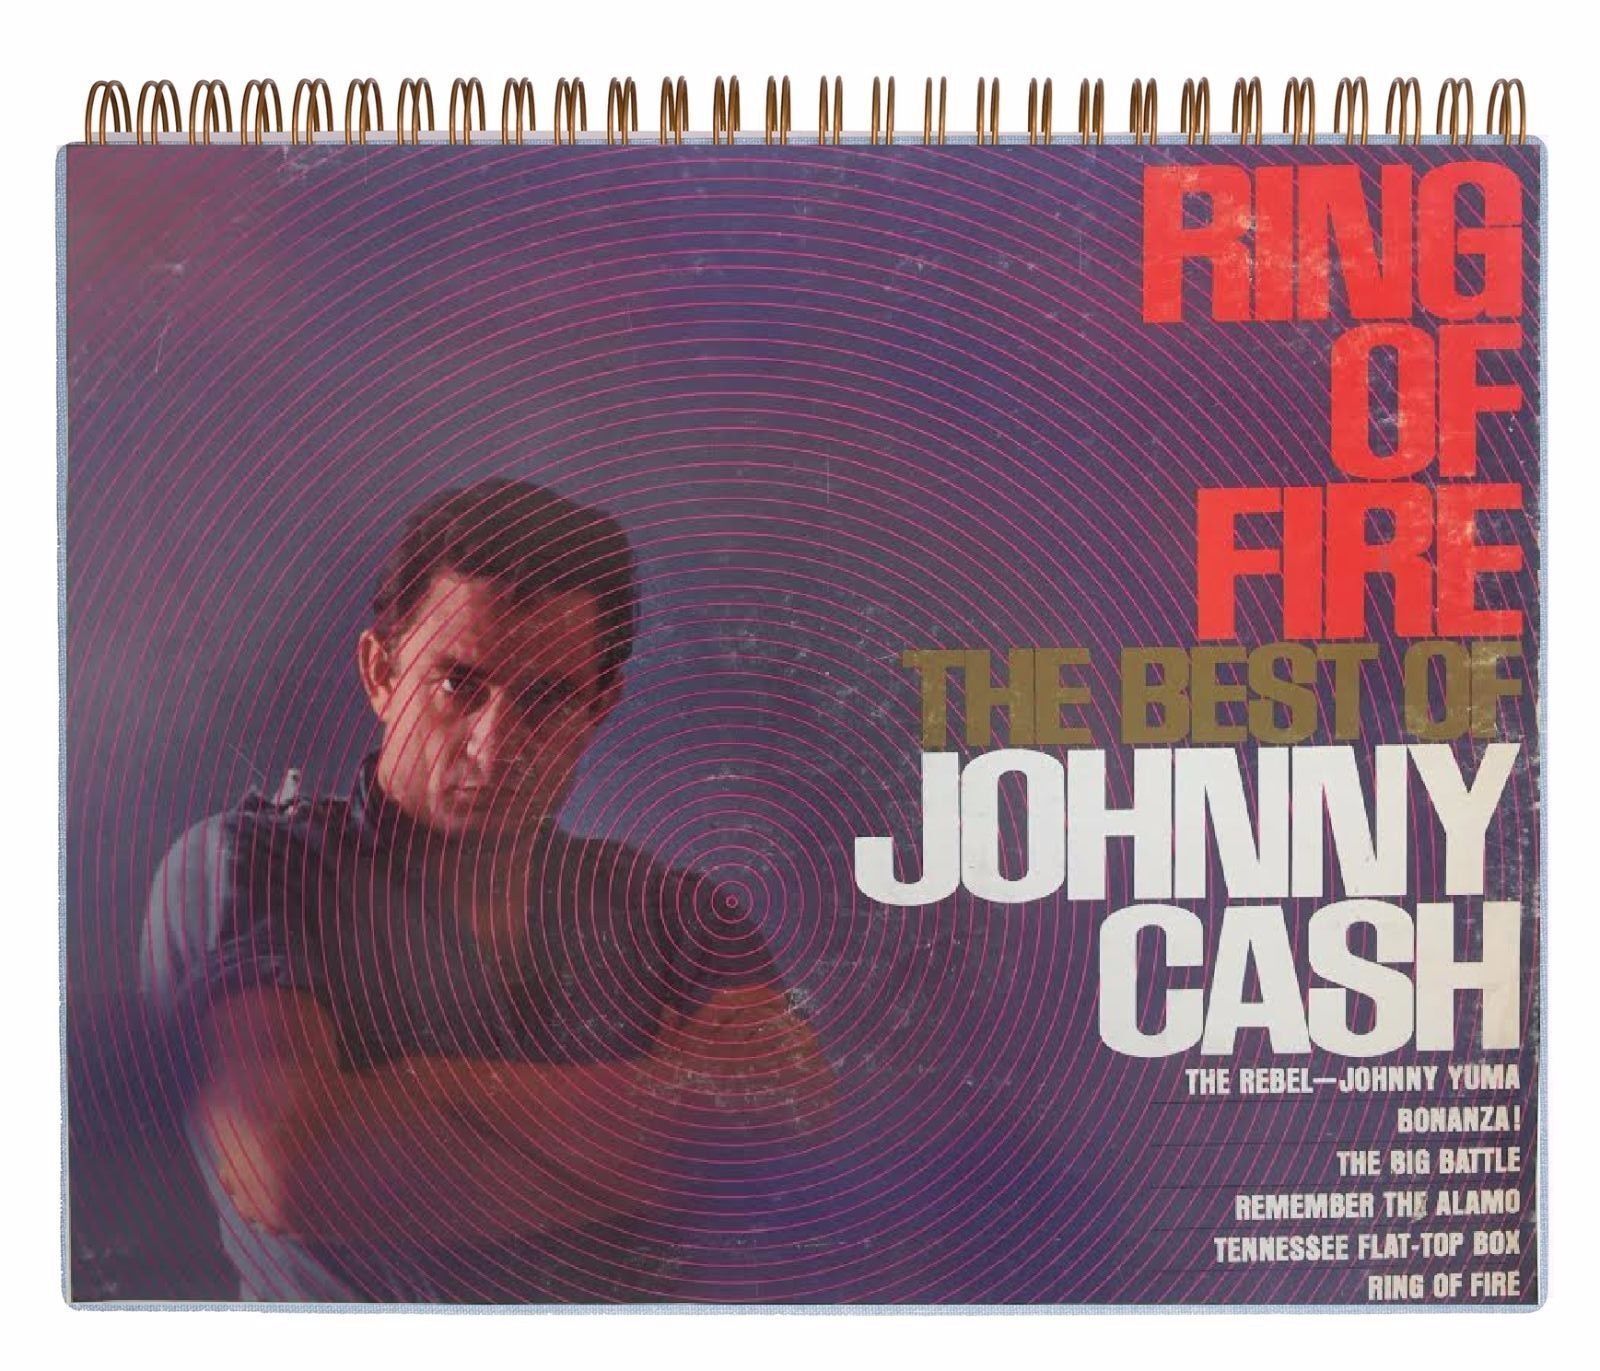 zwak beroemd Eervol Johnny Cash - Ring of Fire: The Best of Johnny Cash Album Cover Notebook  vintage | eBay